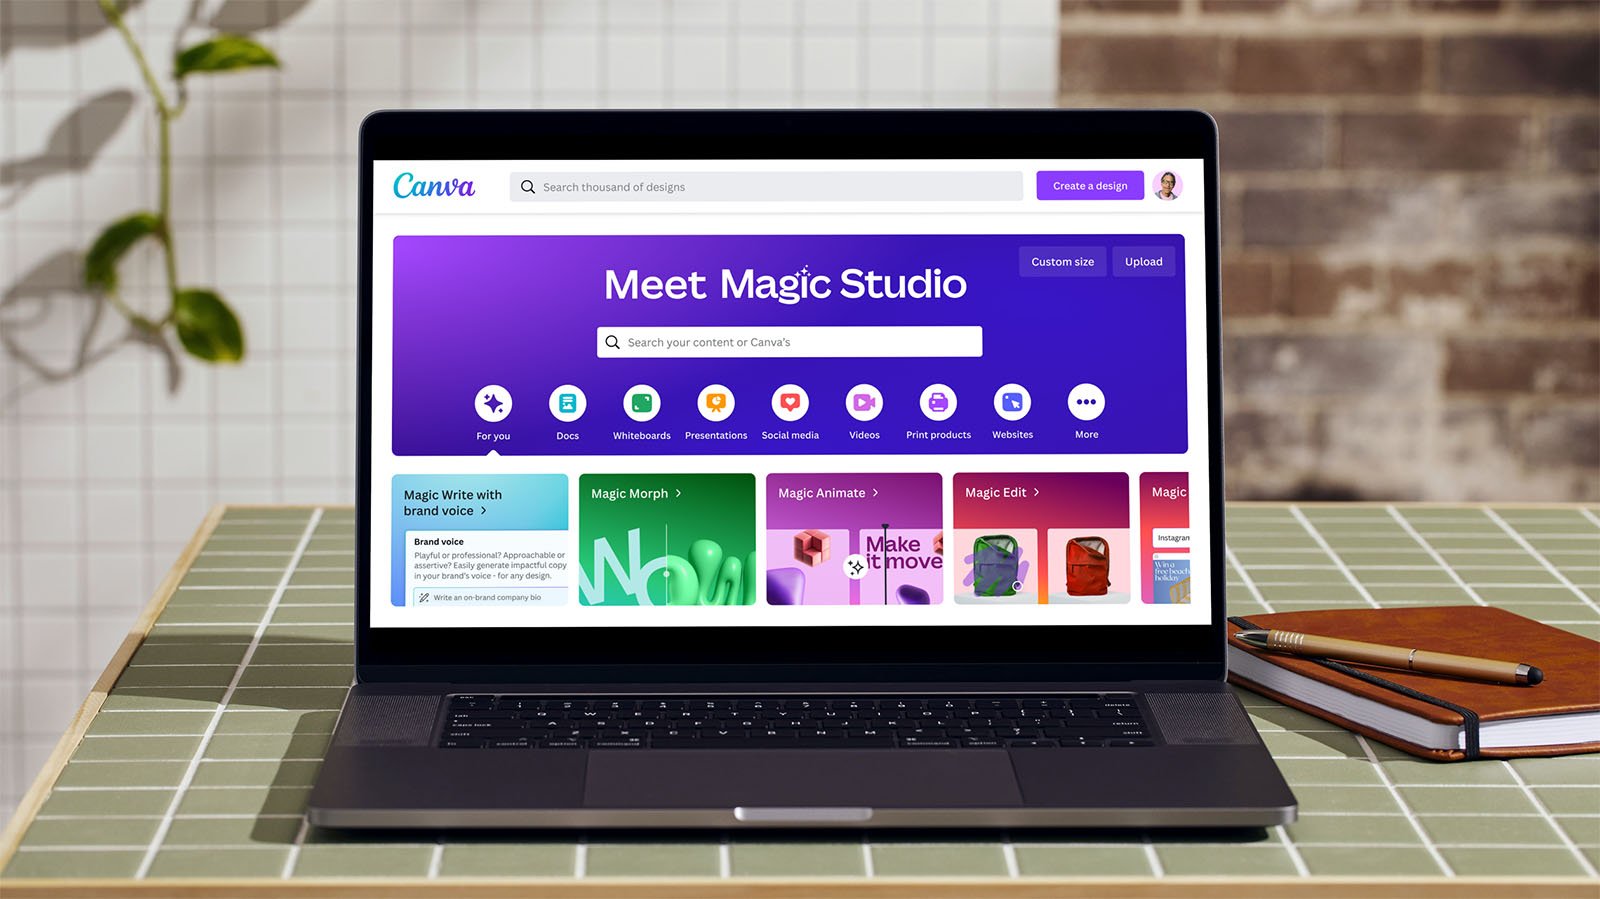 Canva's Magic Studio on a laptop screen.